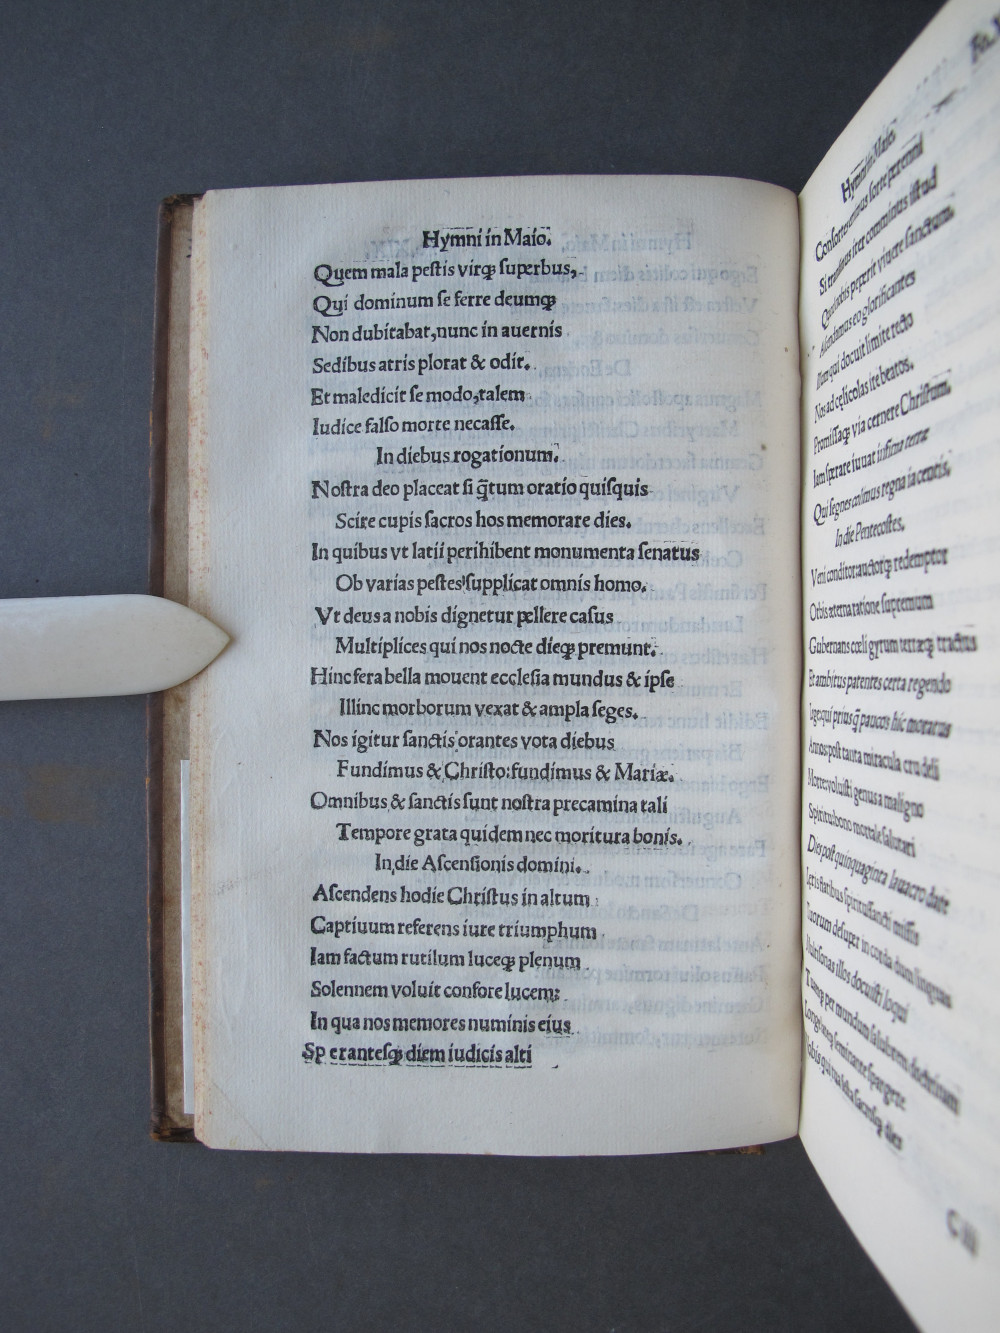 Folio 19 verso